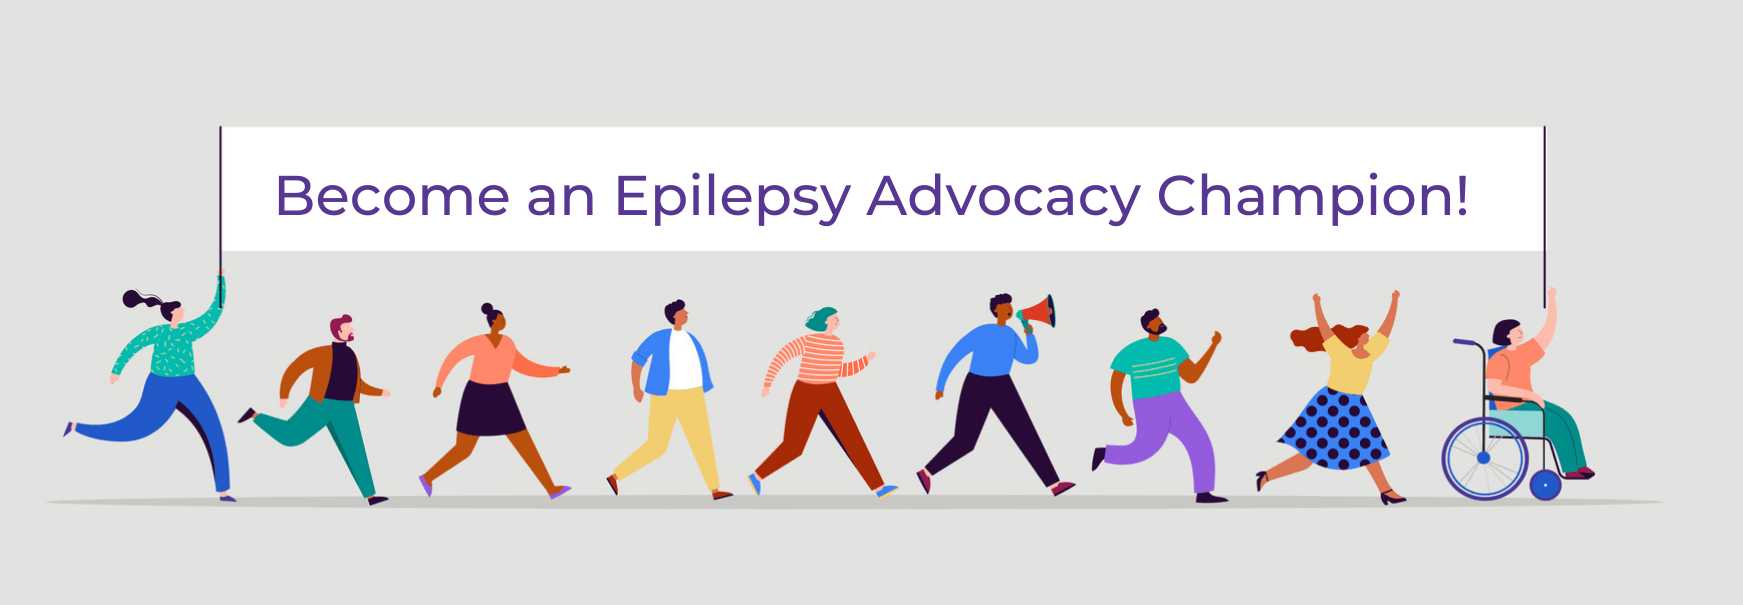 Become an Epilepsy Advocacy Champion